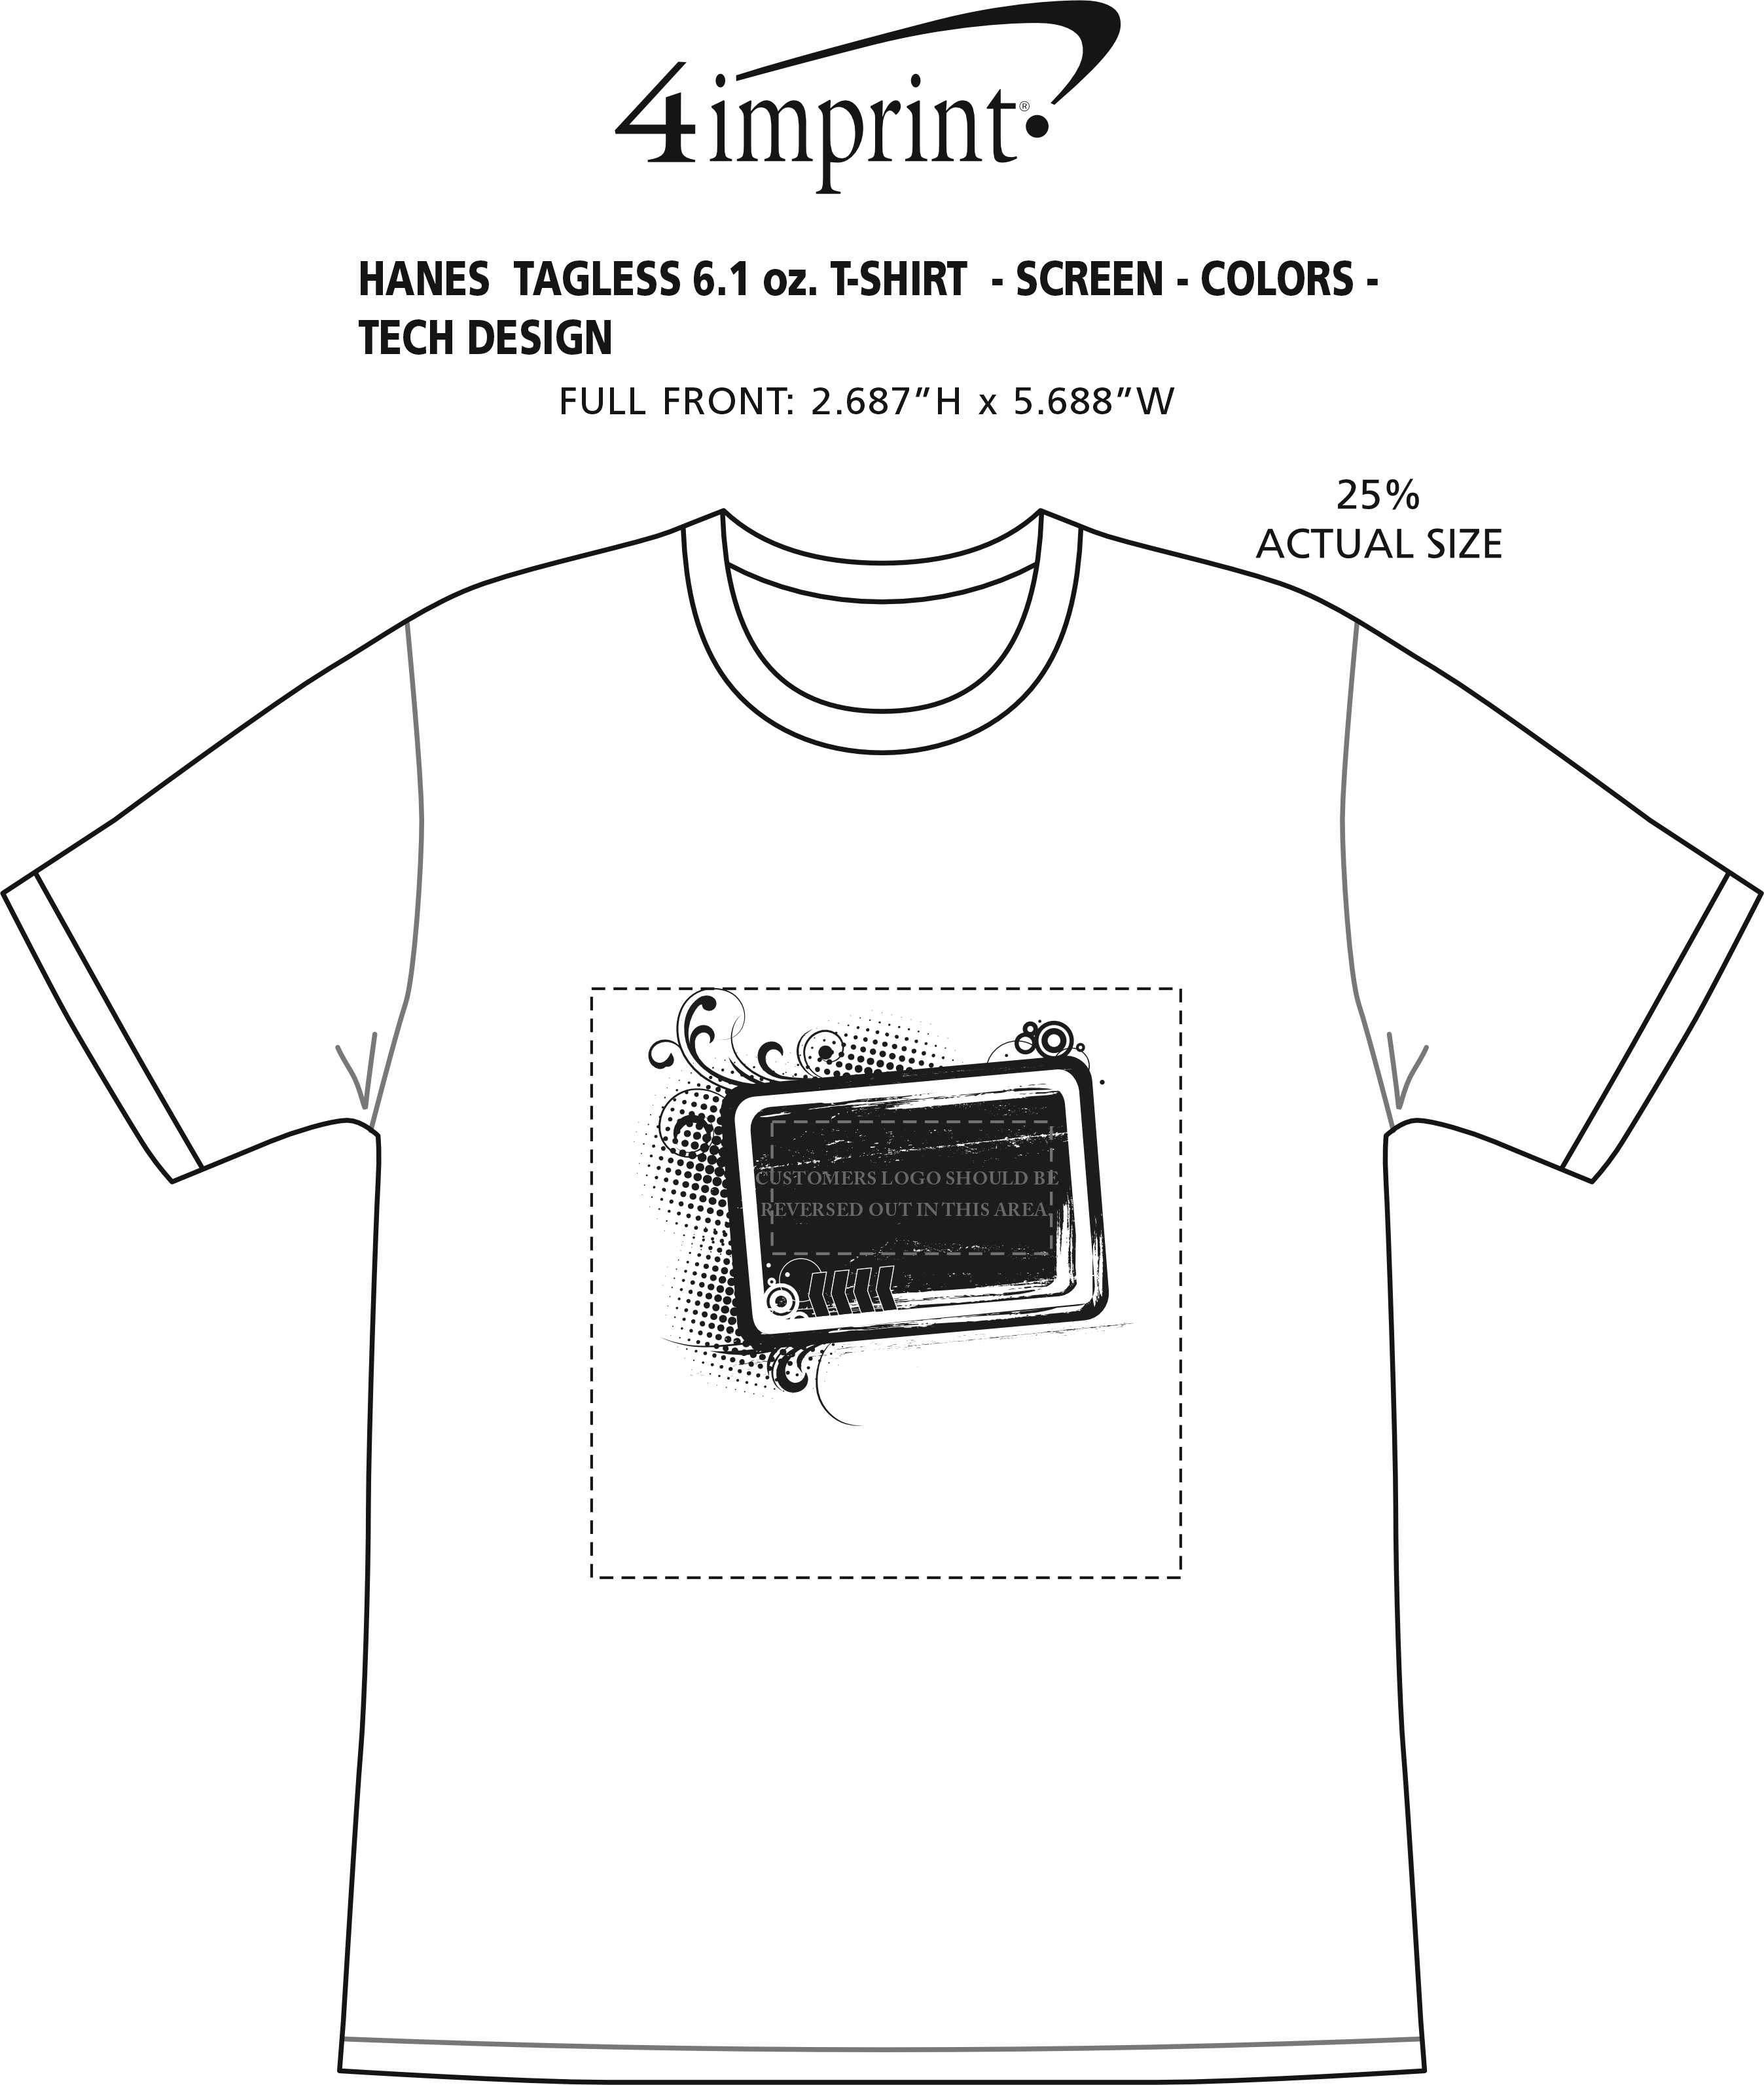 Imprint Area of Hanes Authentic T-Shirt - Screen - Colors - Tech Design